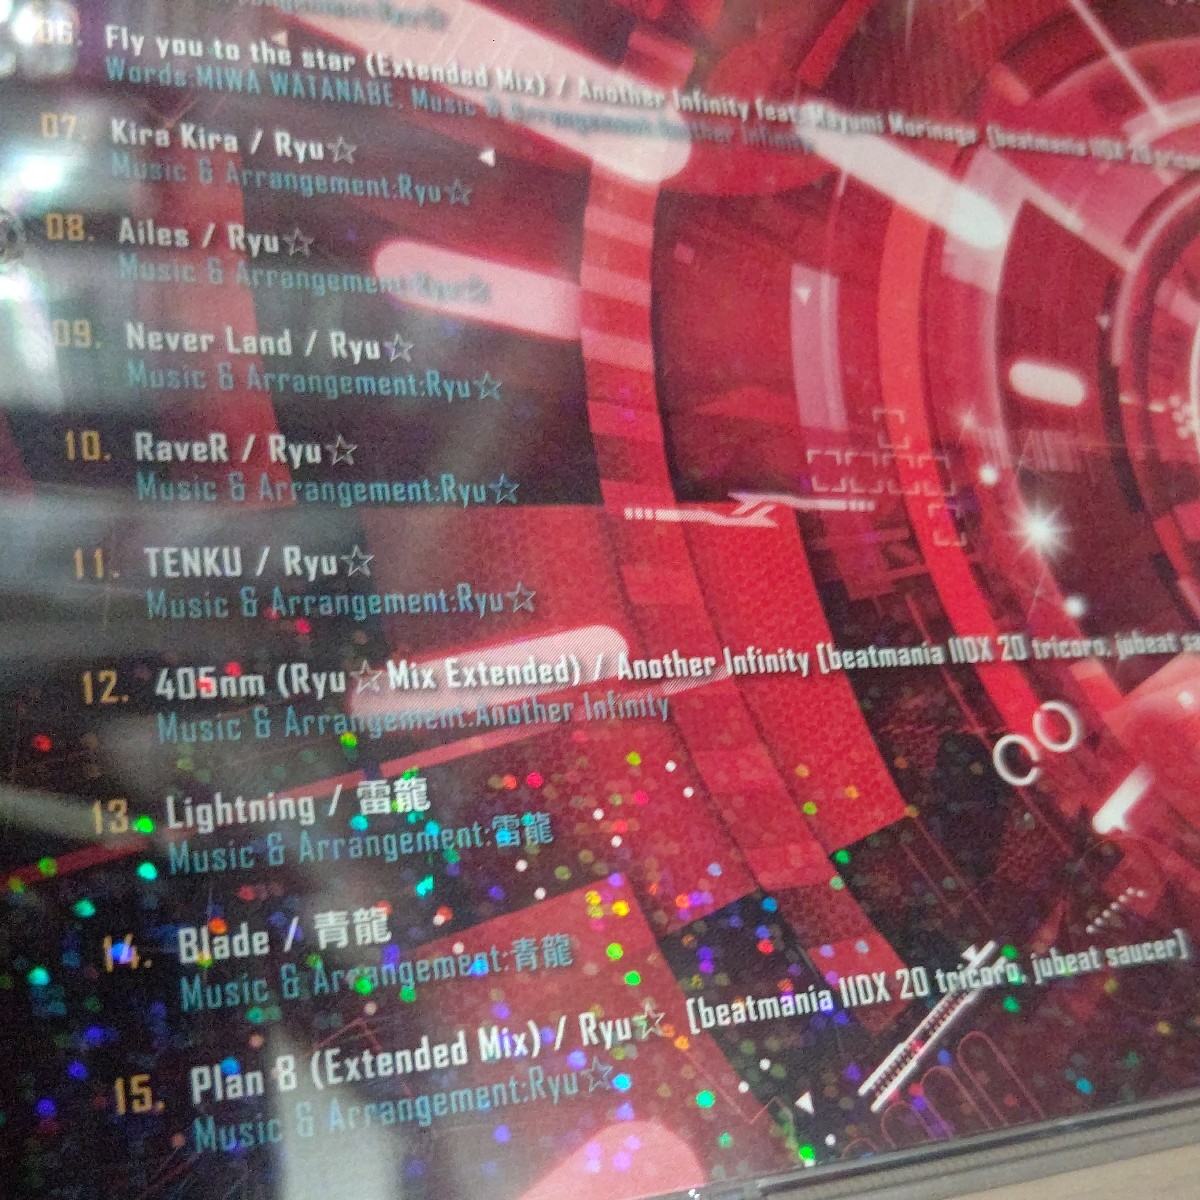 Plan 8／Ryu☆ 音ゲー Another Infinity Mayumi Morinaga 雷龍 青龍 REFLEC BEAT coletto ゆゆ式 beatmania ⅡDX 20 tricoro jubeat saucer_画像4